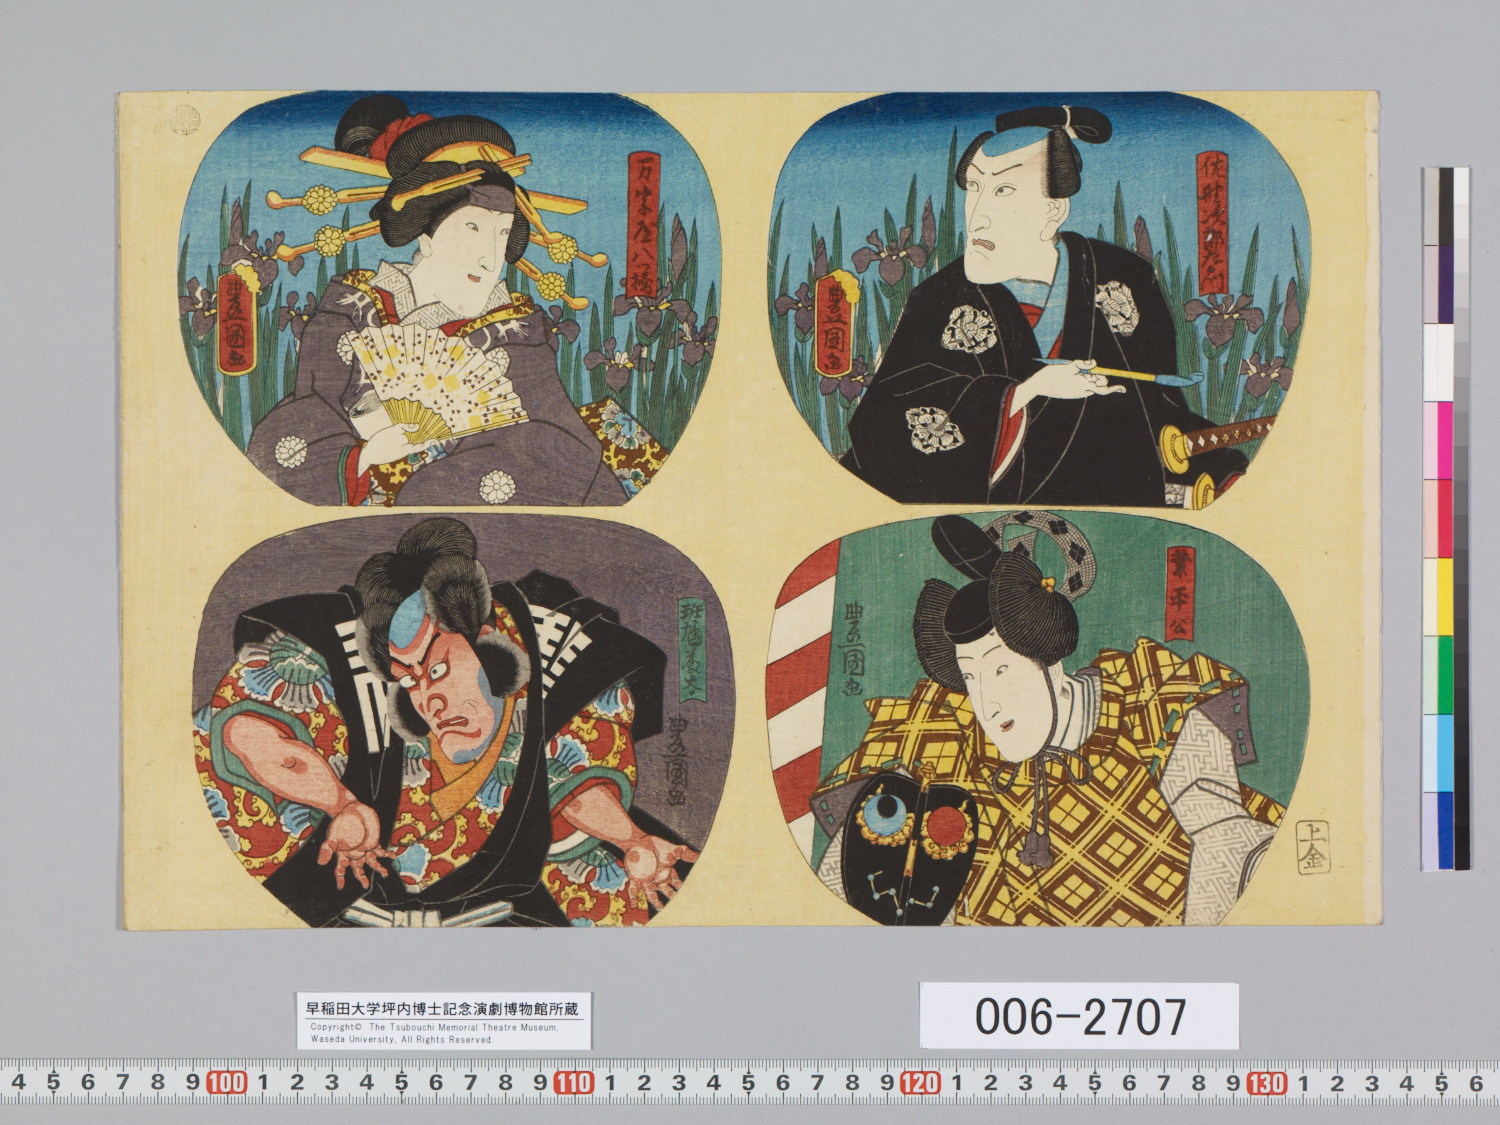 Estampes Japonaises de Hiroshige II (1826-1869) – Uchiwa Gallery